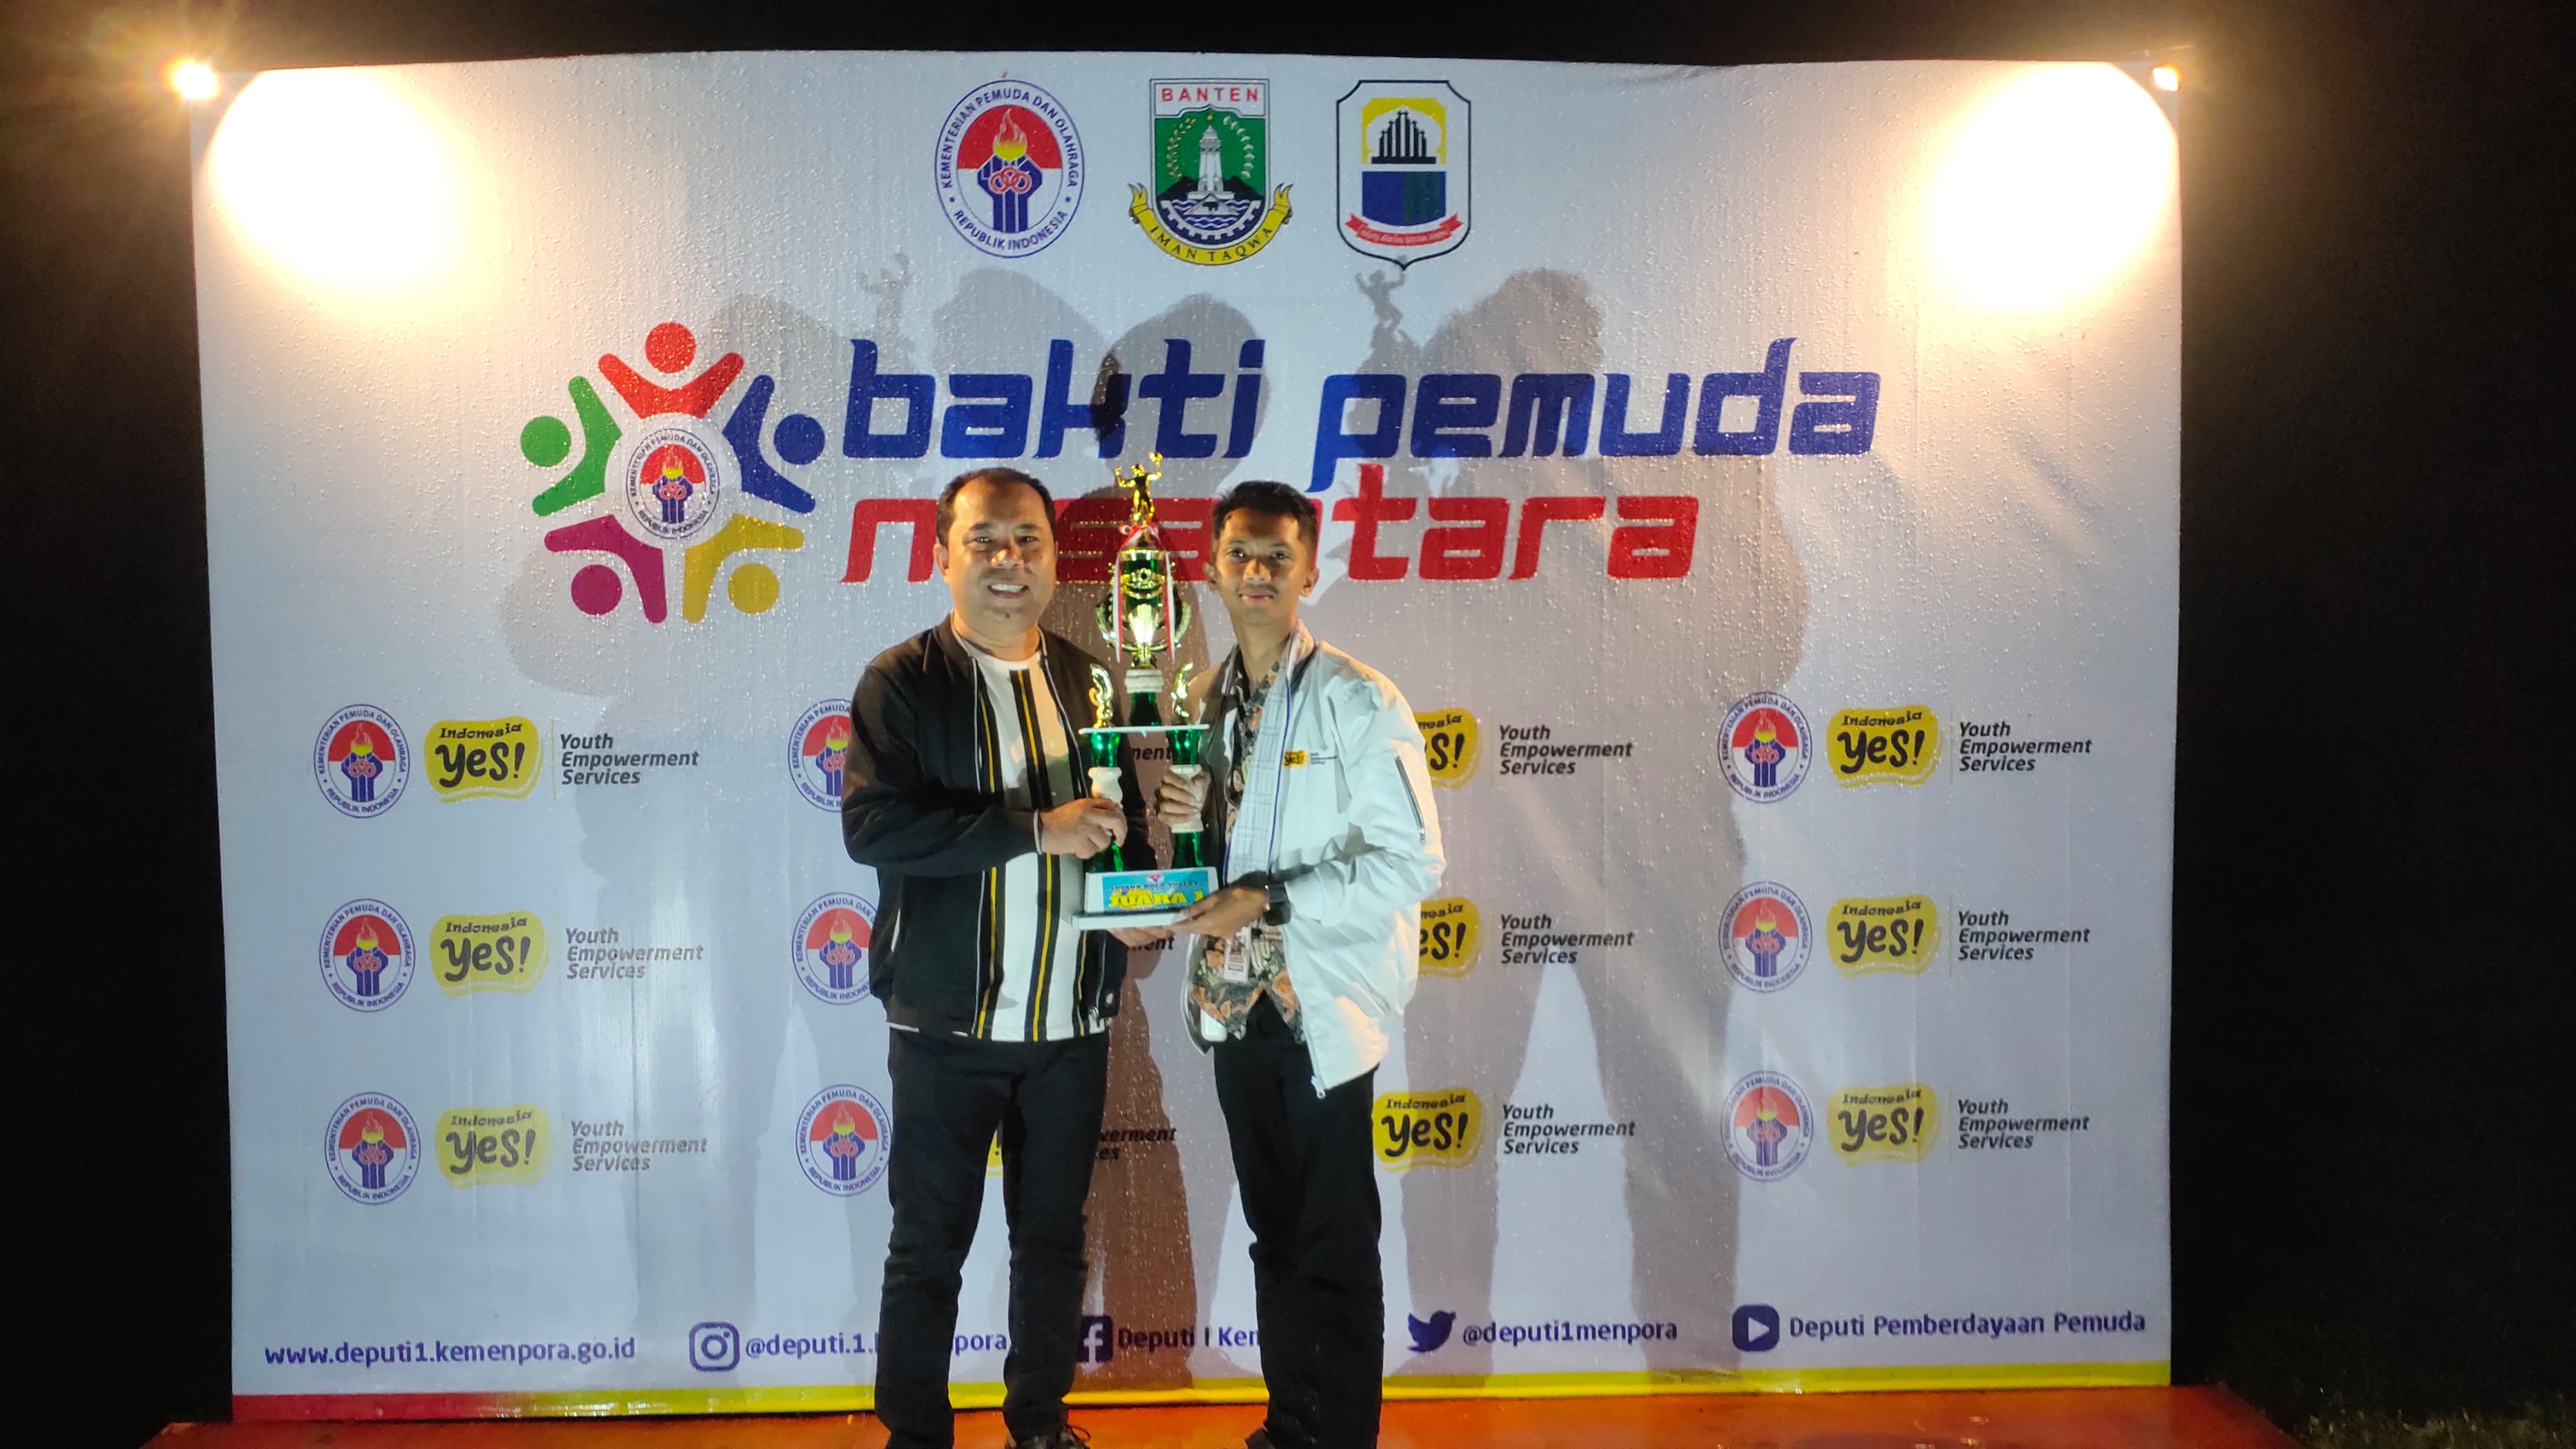 Alumni KPI meraih Juara 1 diajang perlombaan Kegiatan Bakti Pemuda Nusantara Memperoleh Penghargaan Oleh Kemenpora RI terkait Digitalisasi Desa